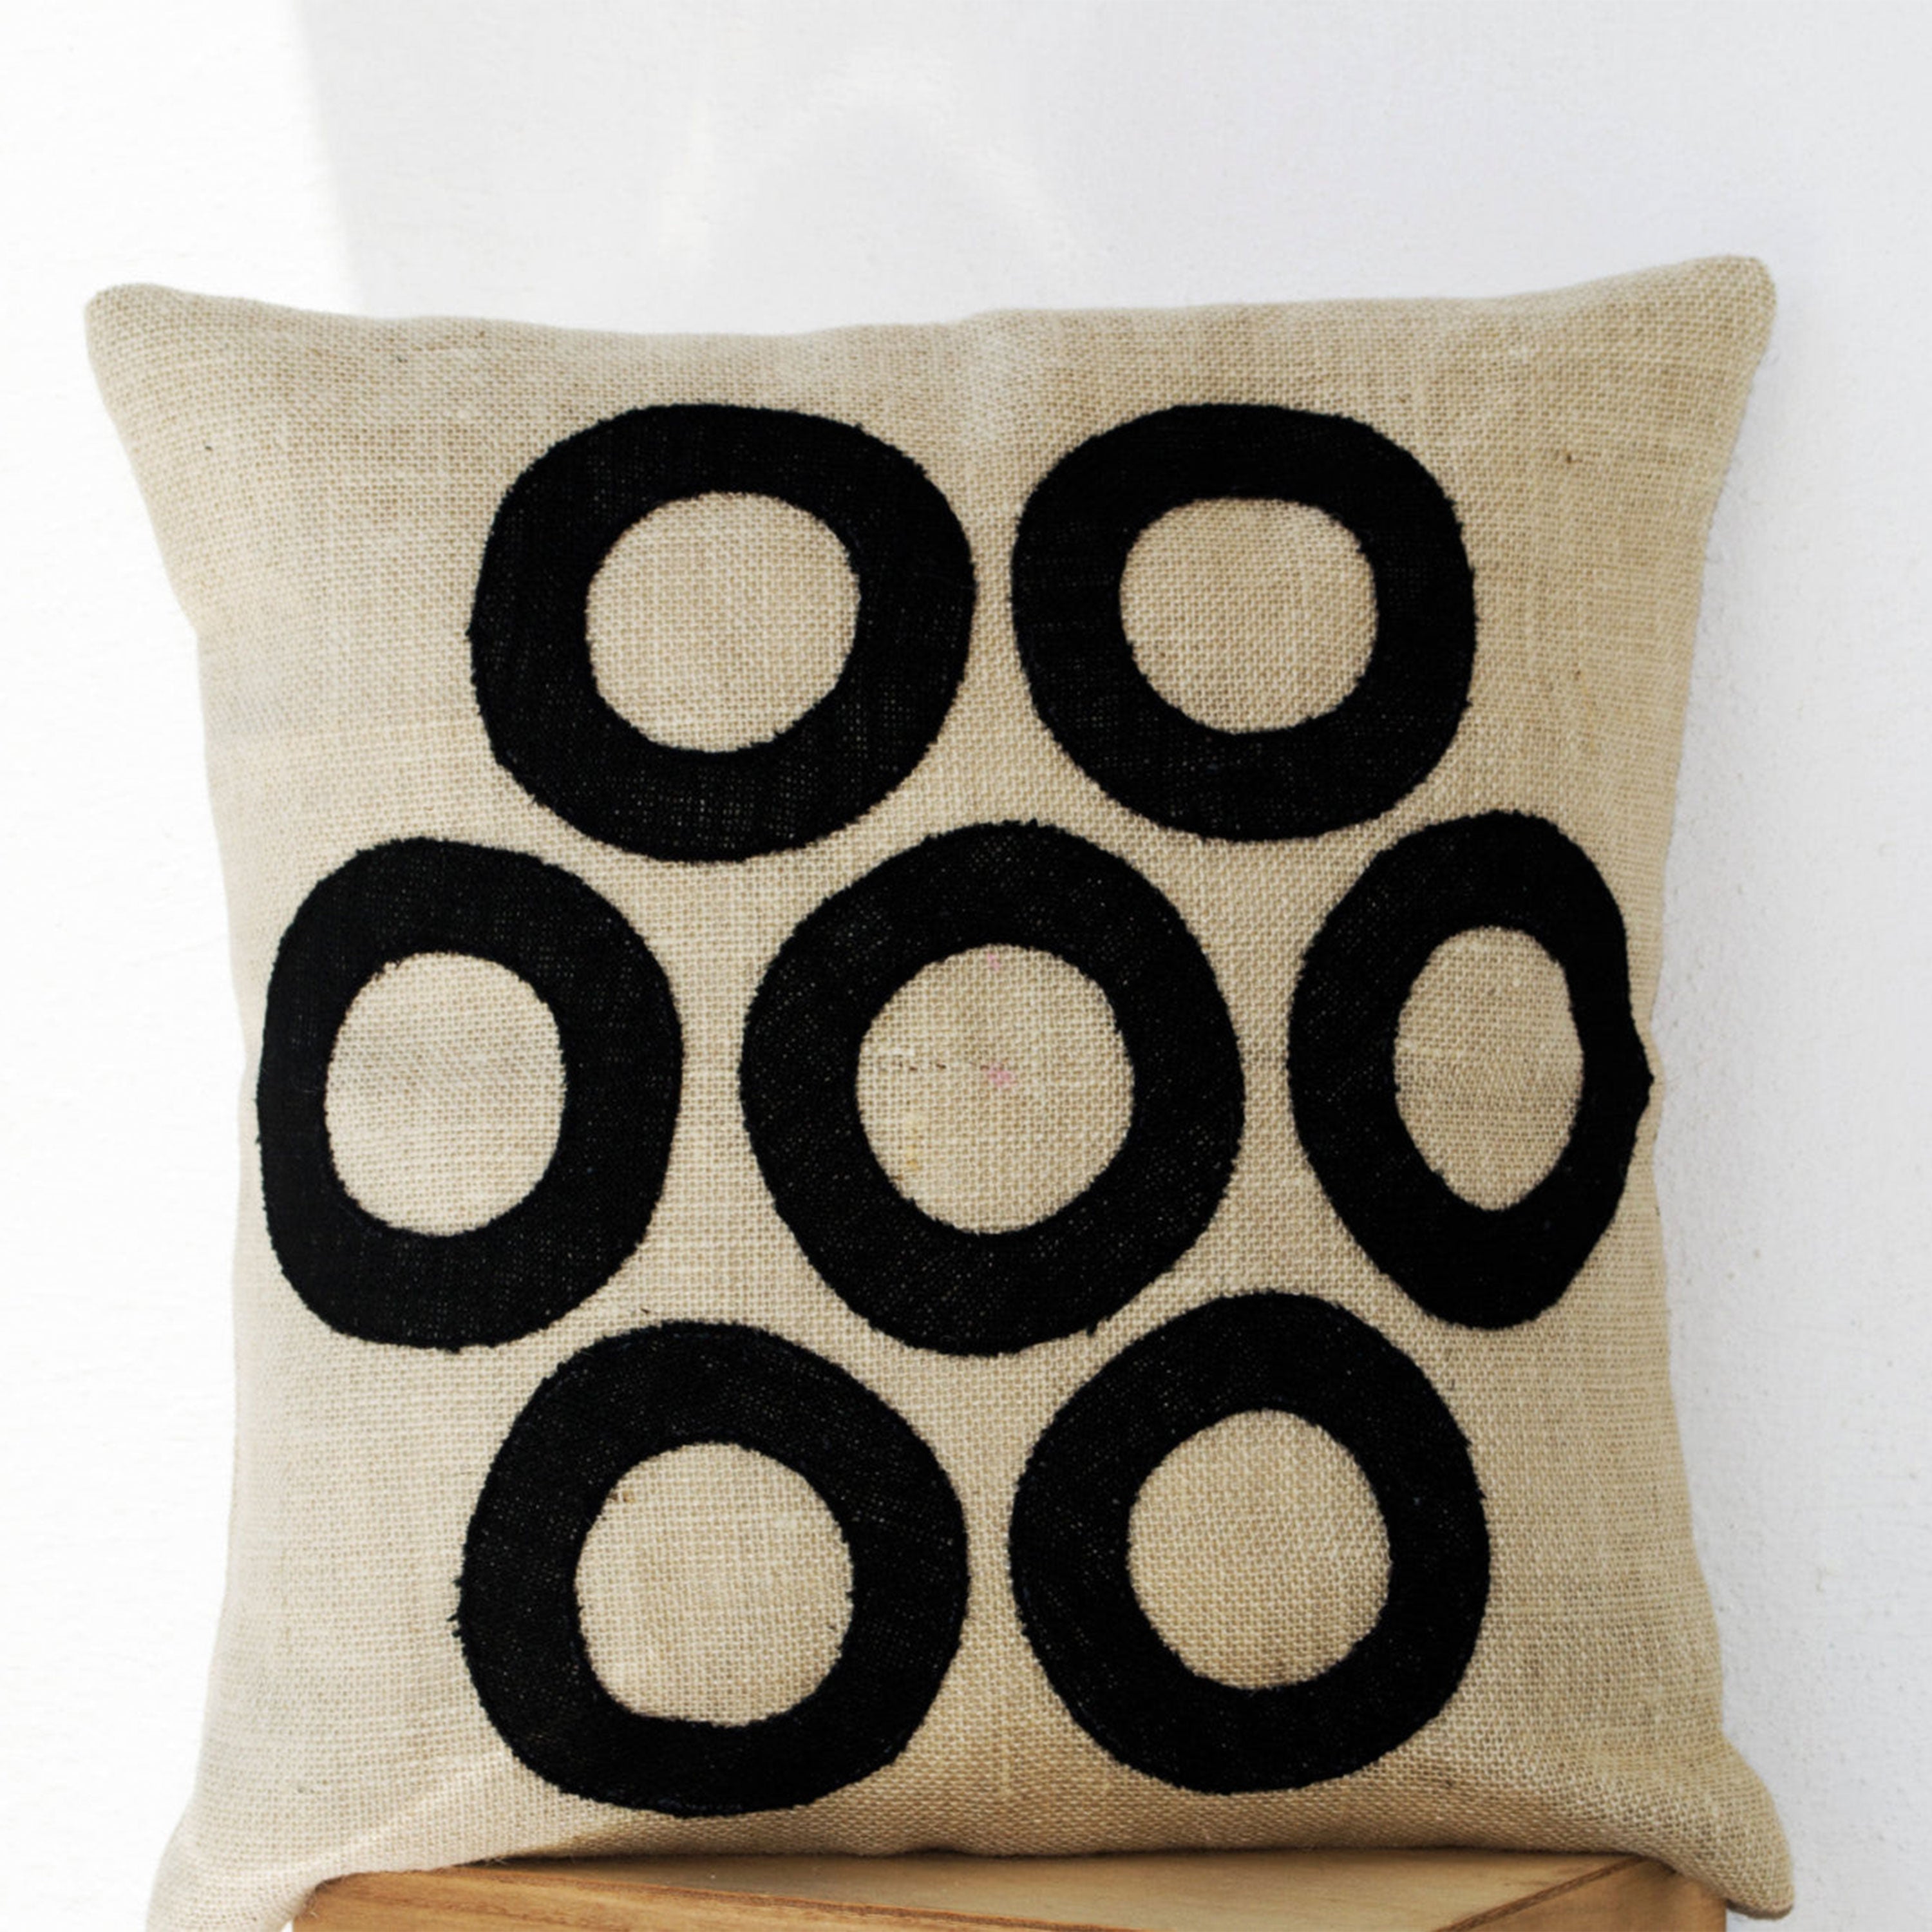 Ivory Pillows - Black Geometric Throw Pillows  - Burlap Pillow - Decorative applique cushion cover- Cream Black pillow - gift pillow 16X16